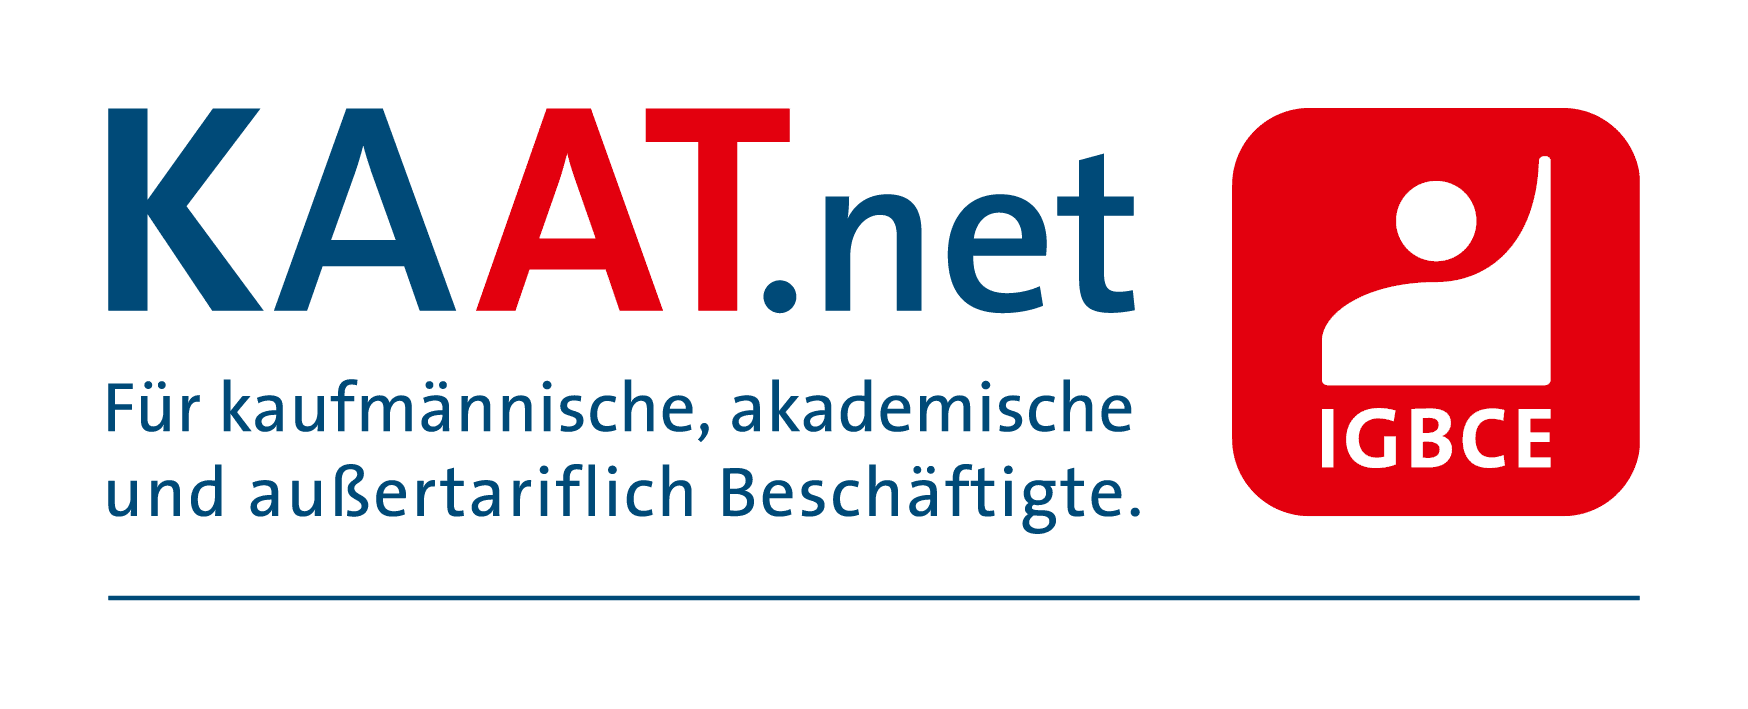 kaat.net Logo